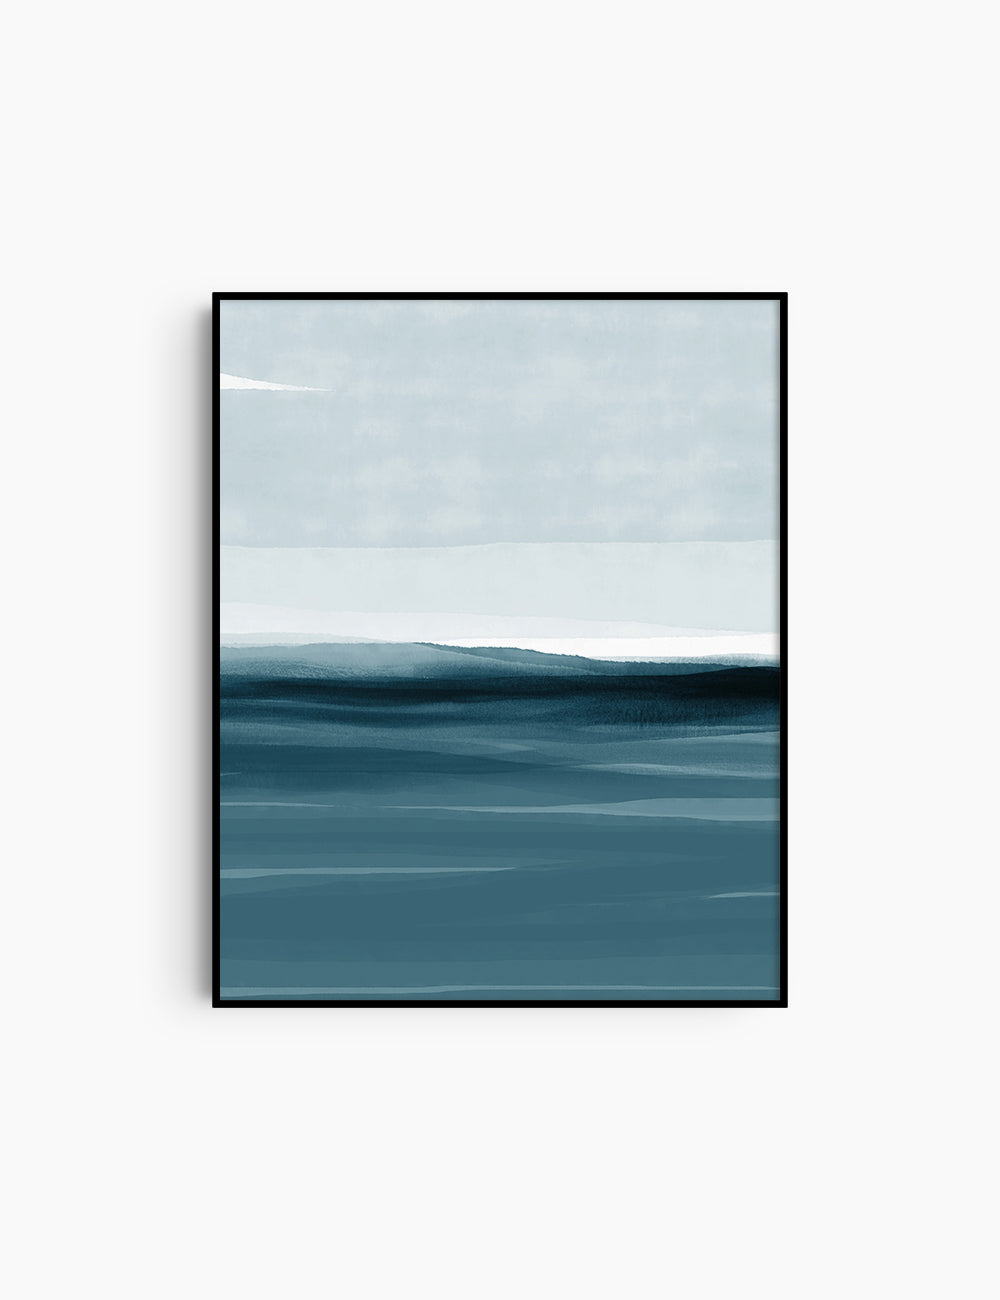 ABSTRACT WATERCOLOR LANDSCAPE. Blue. Ocean. Sea. Aesthetic. Minimalist. Printable Wall Art. - PAPER MOON Art & Design